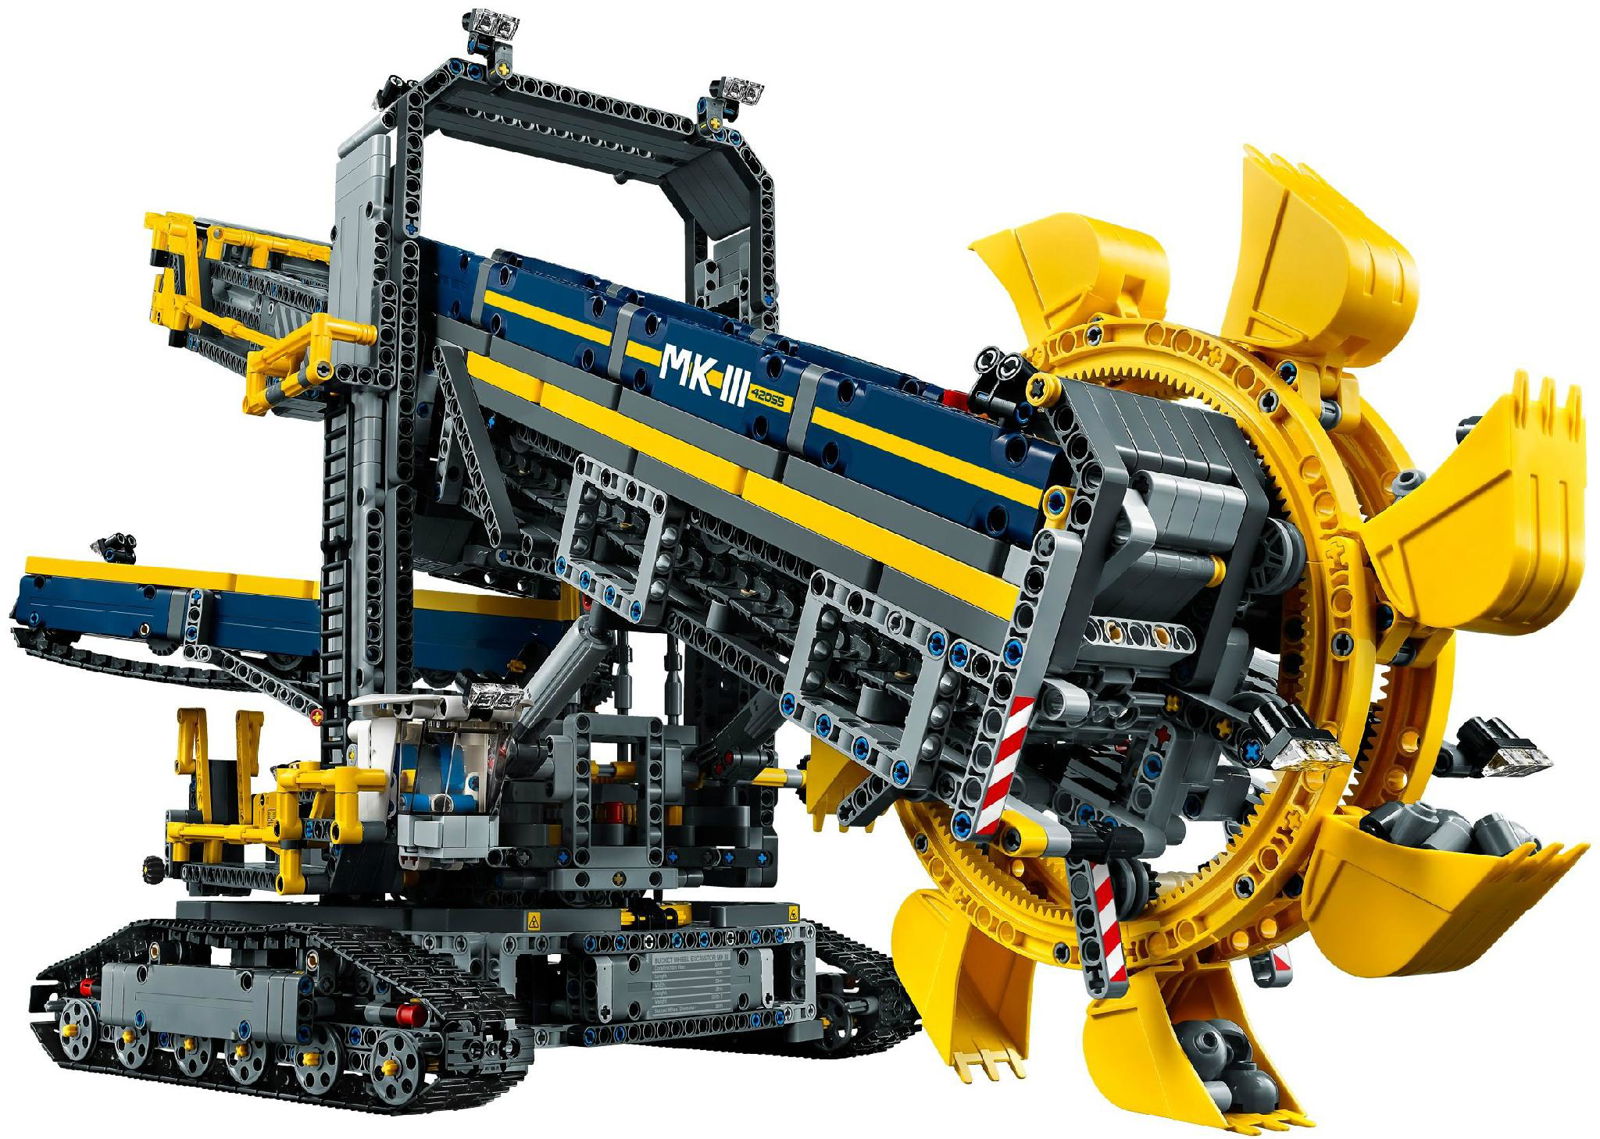 LEGO Technic 42055 Bucket Wheel Excavator Building Kit 4